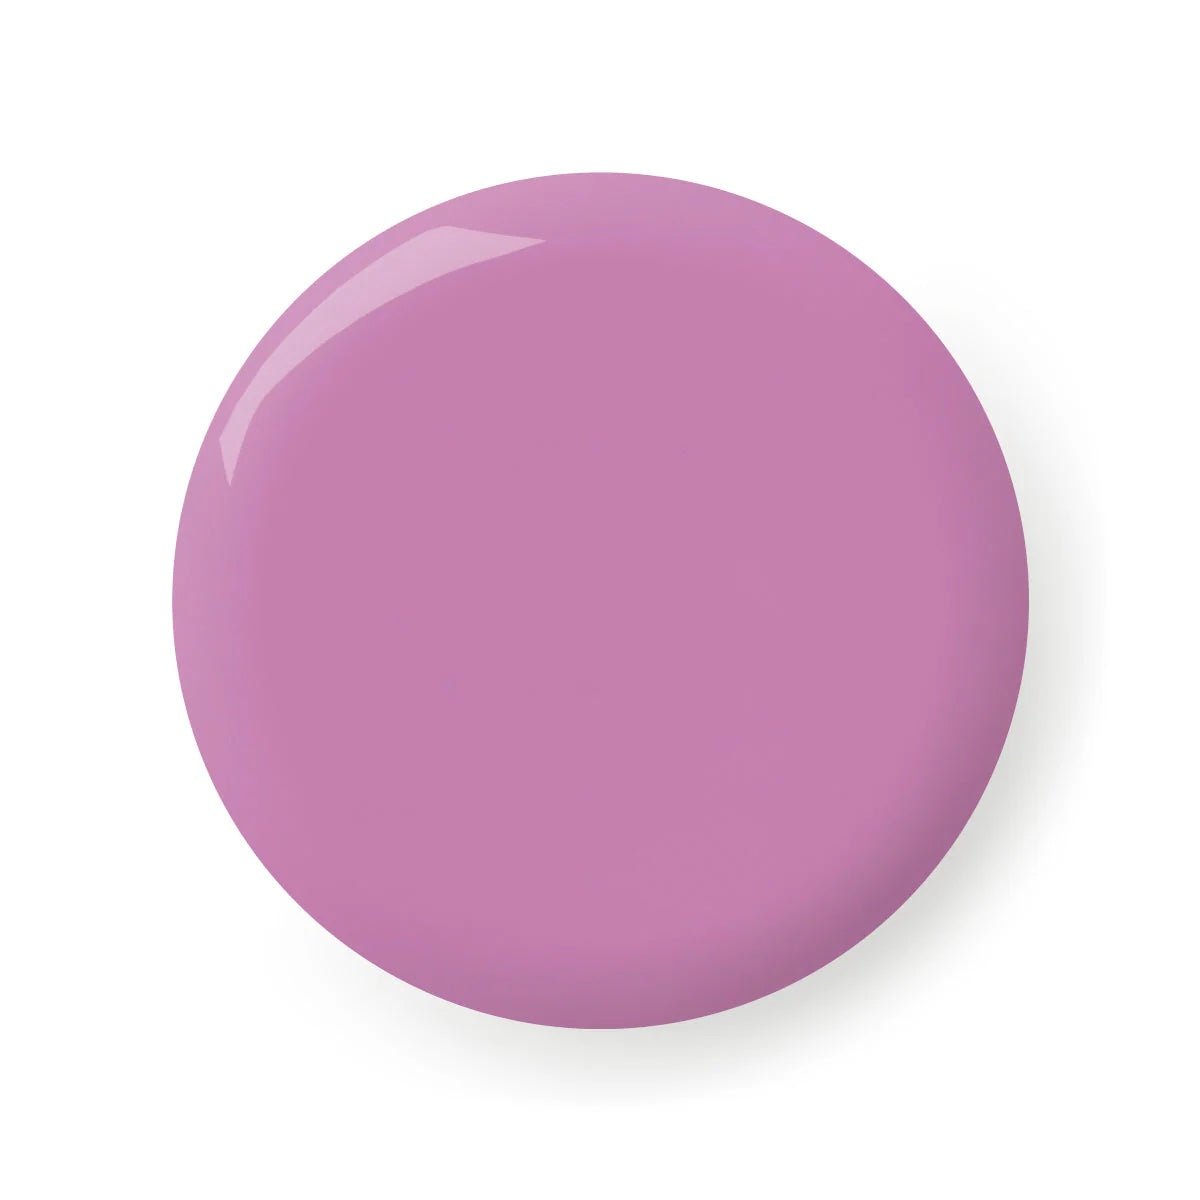 Heliotique | London Grace 'Cindy' Light Pink Nail Polish